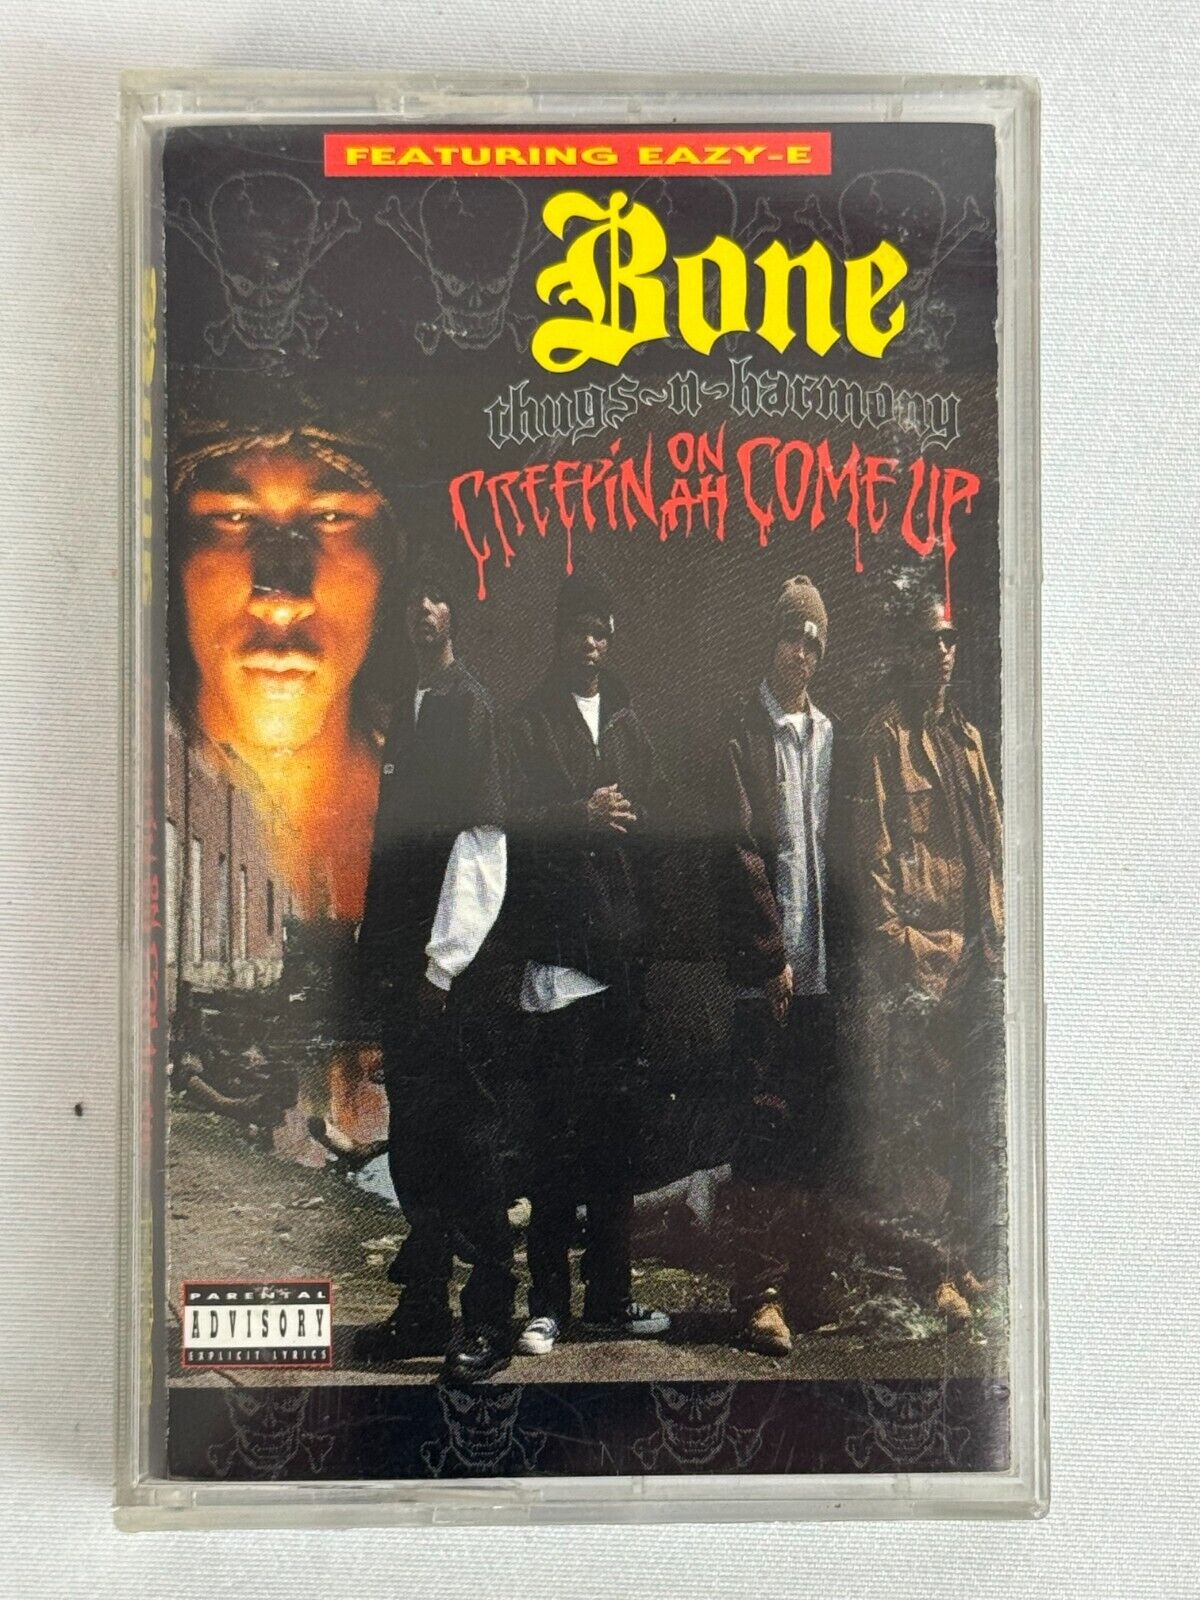 Bone Thugs-N-Harmony Creepin on ah Come Up Cassette With Easy E Gangsta Rap 1994